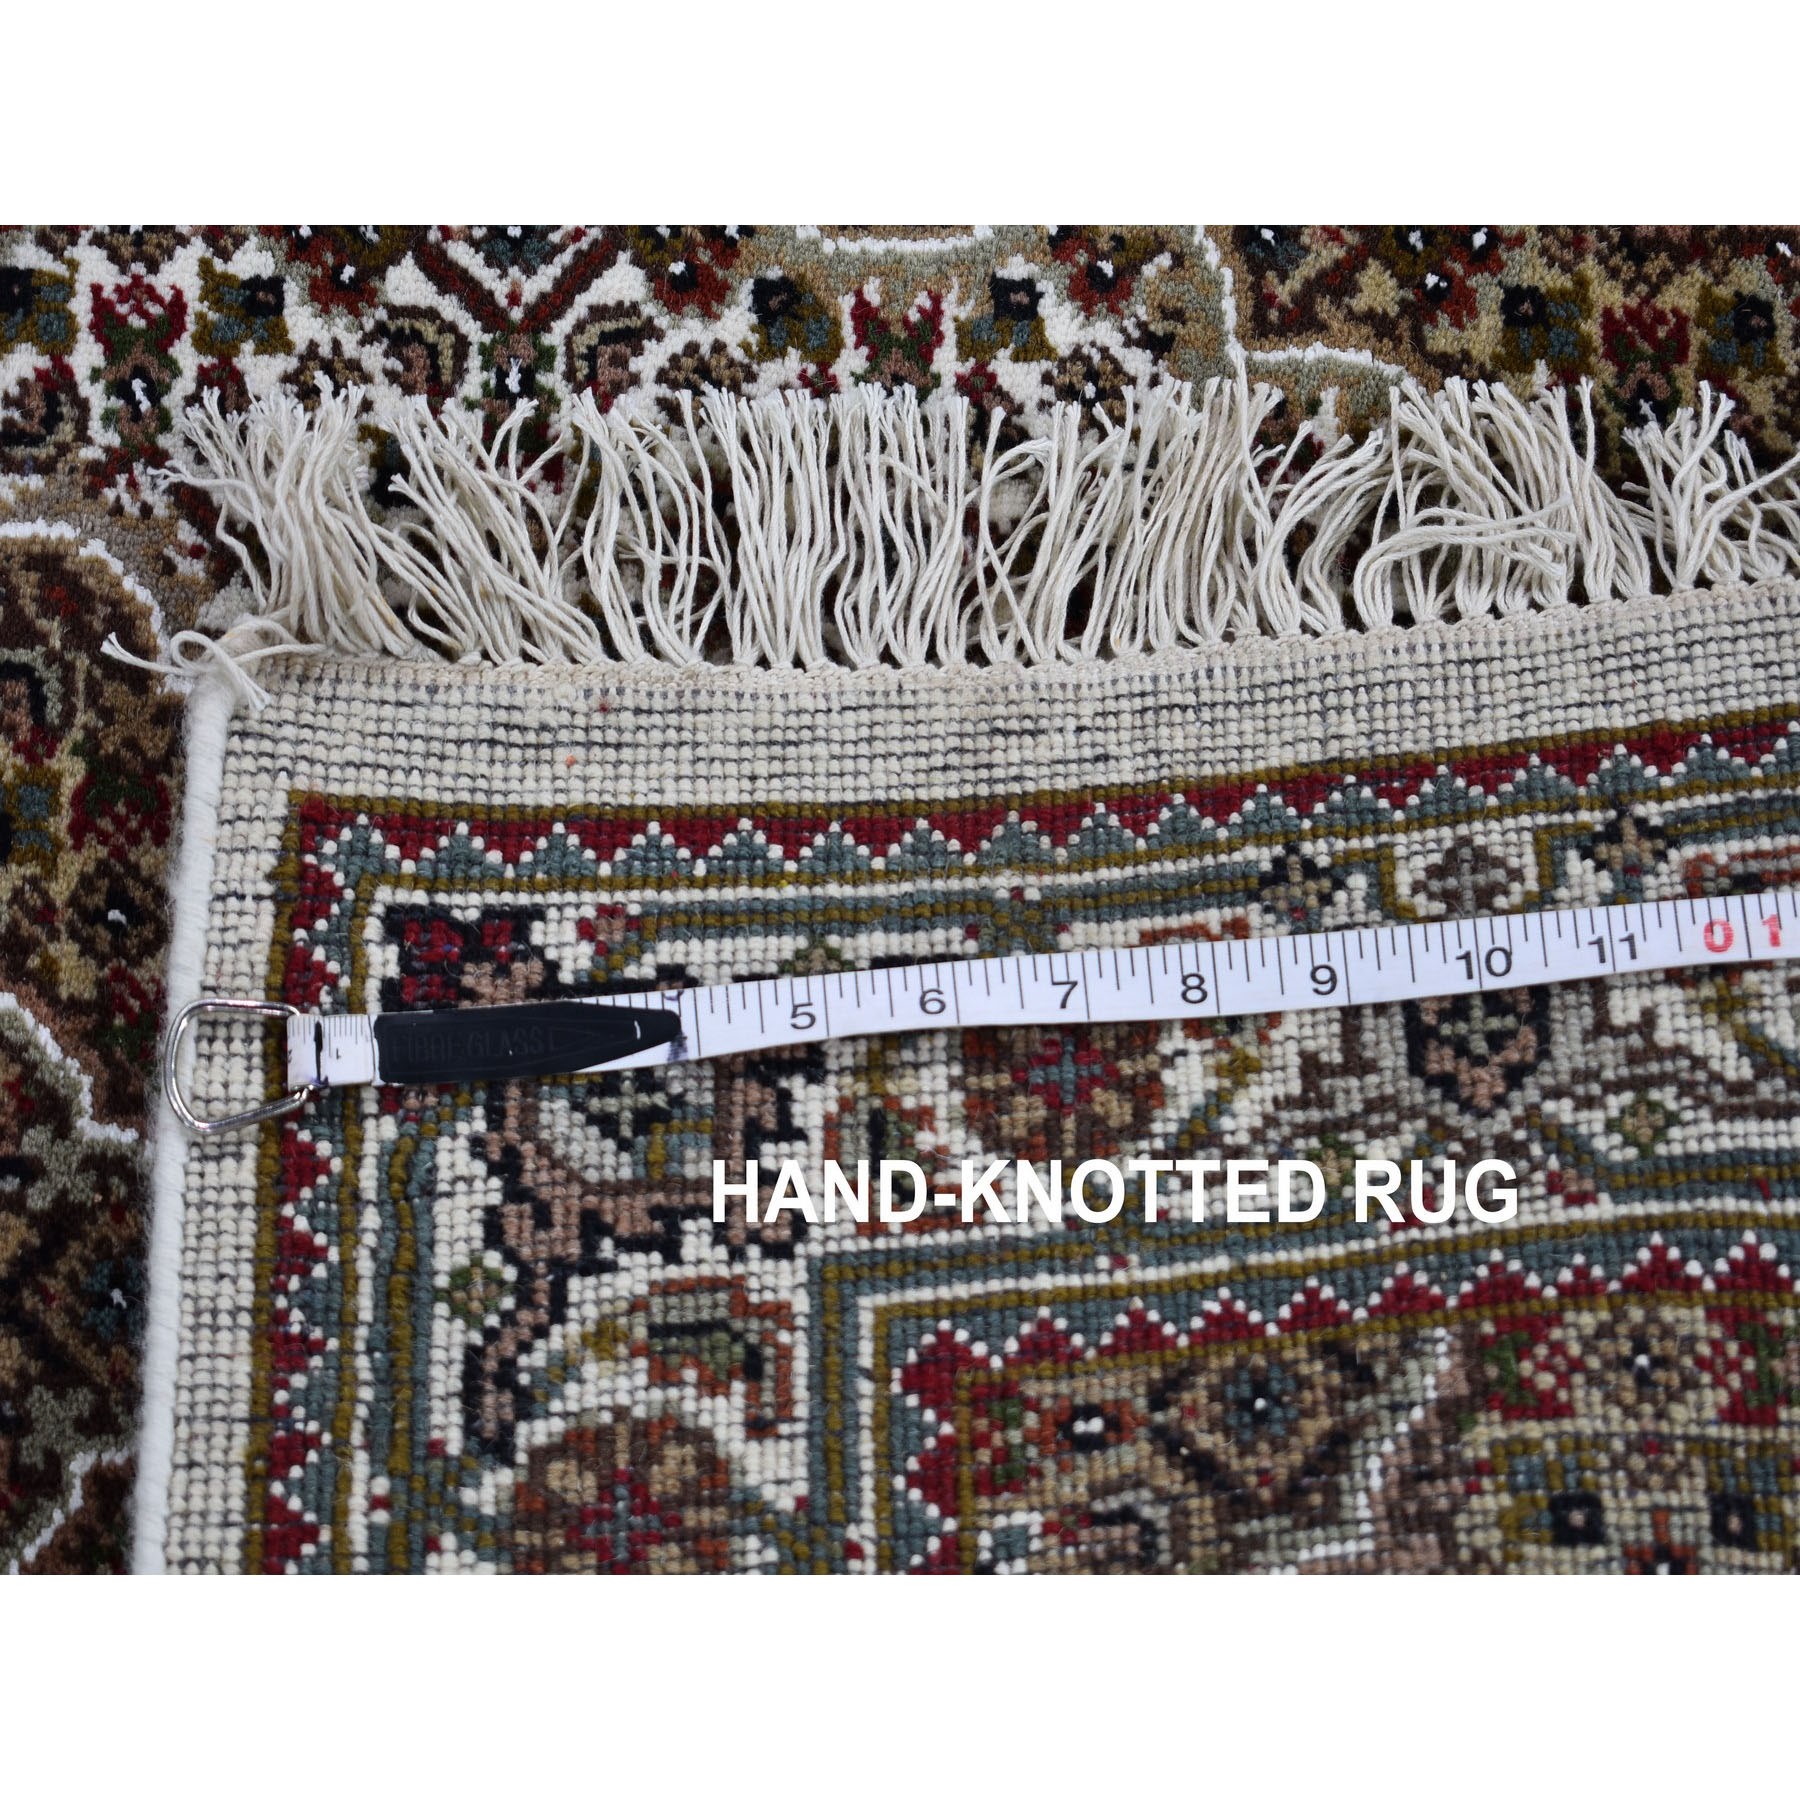 2-8 x6-8  Ivory Runner Wool And Silk Tabriz Mahi Design Hand Knotted Oriental Rug 